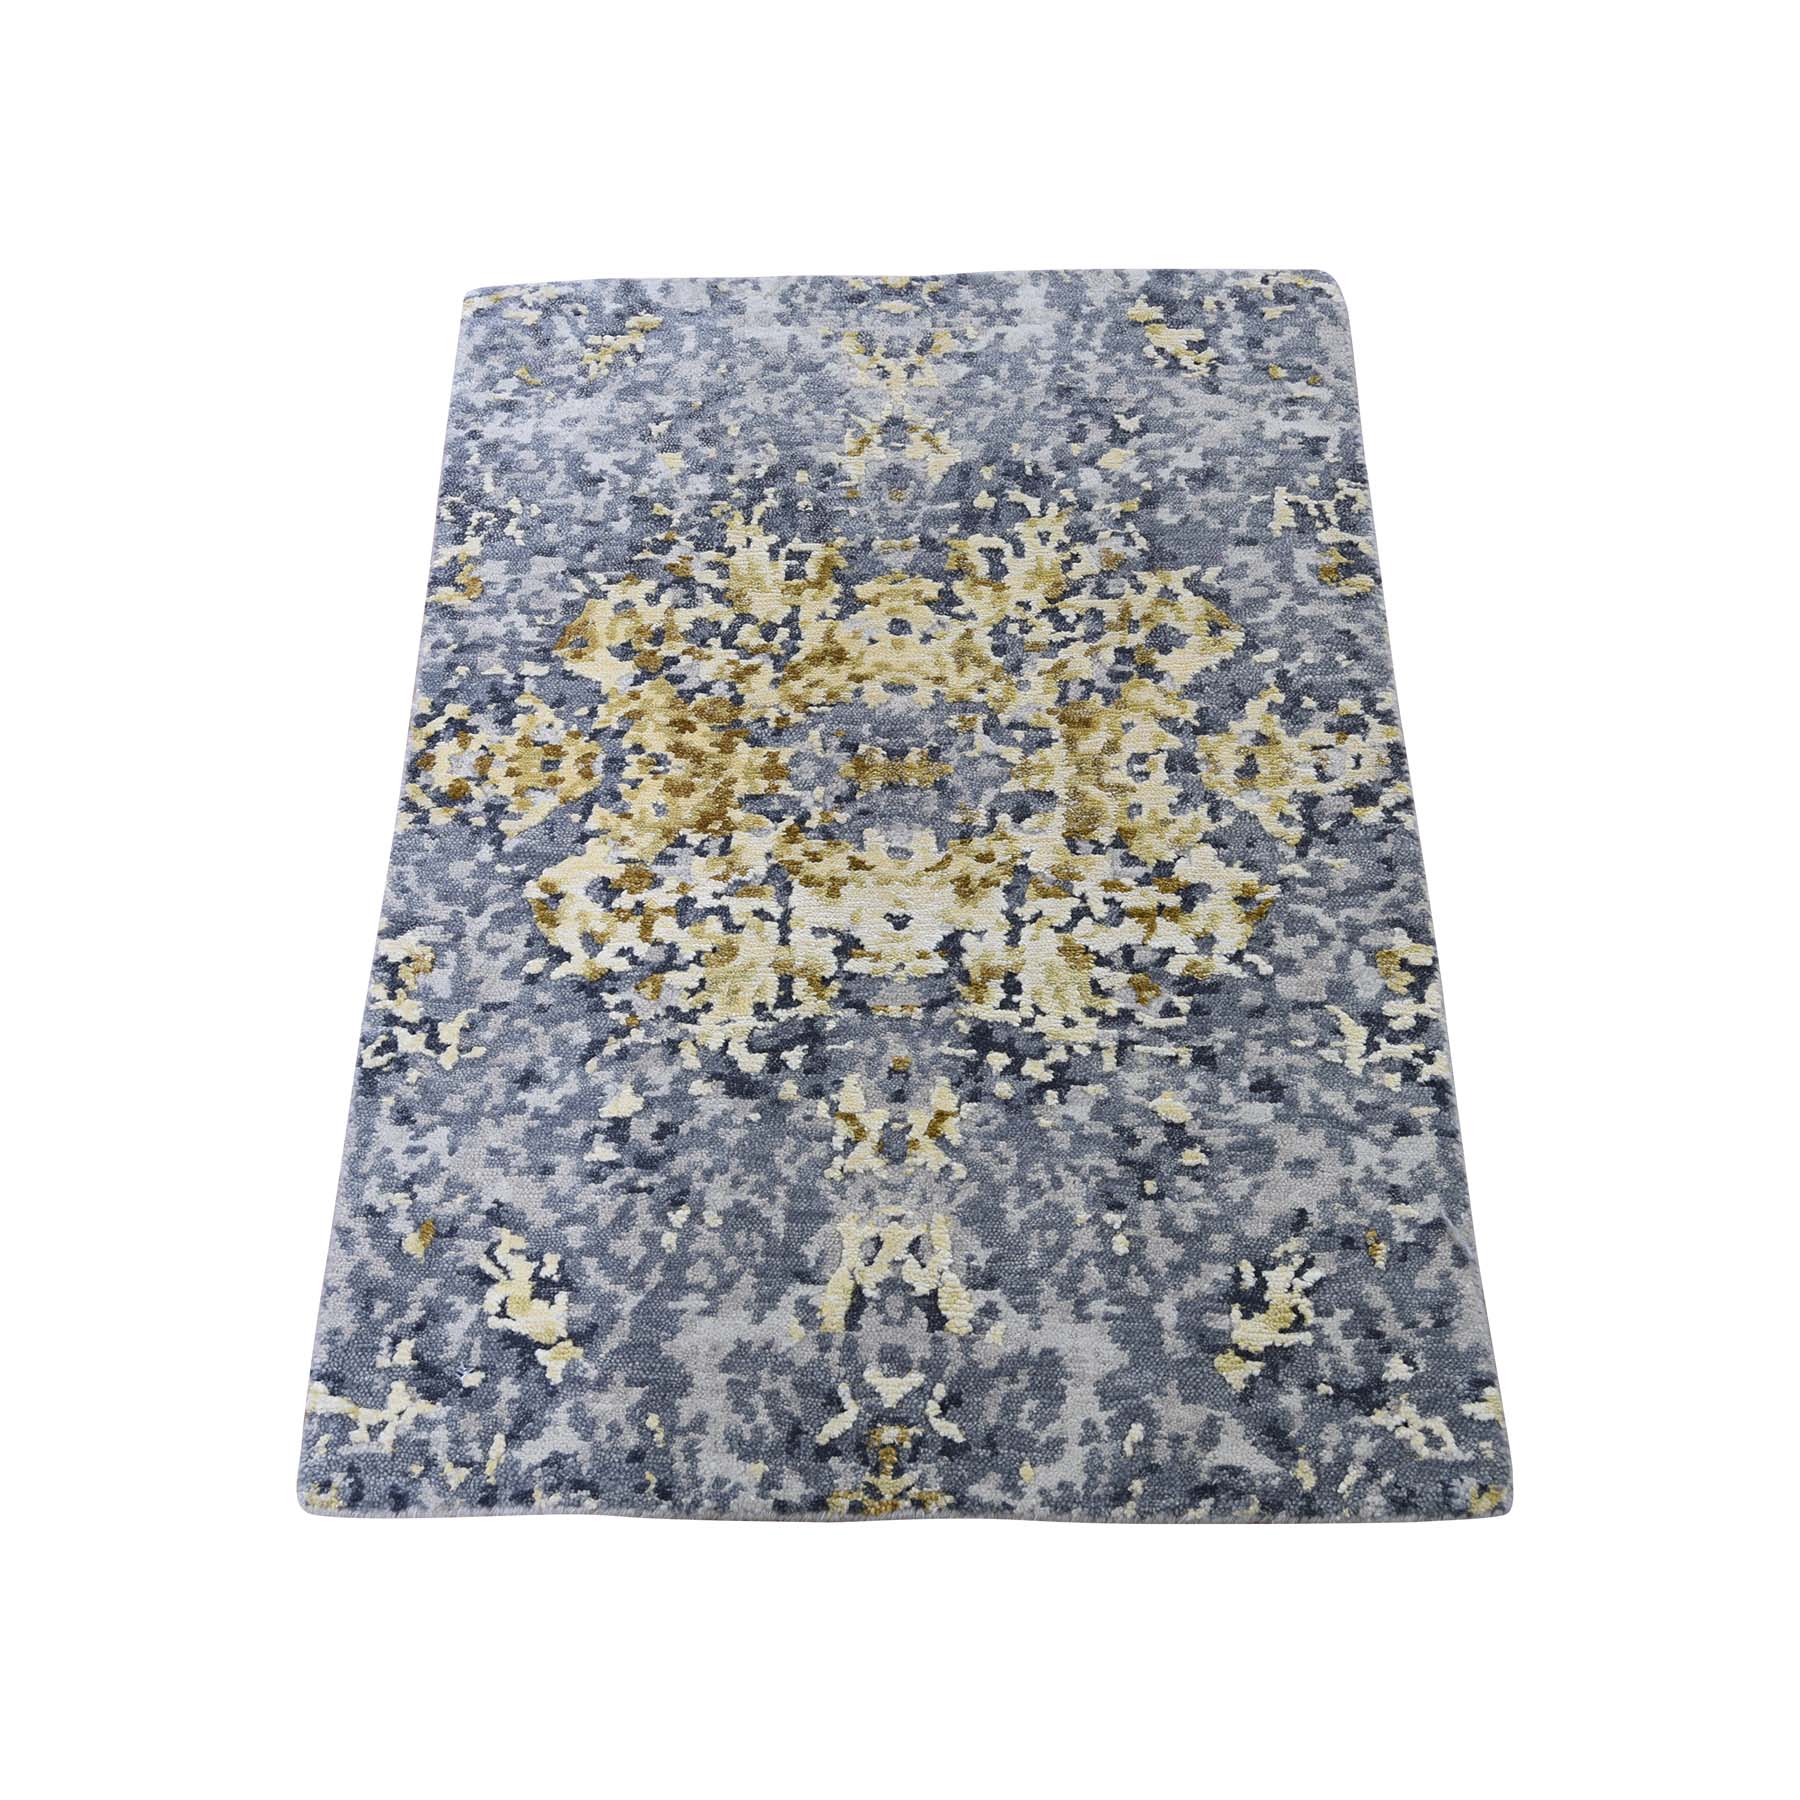 2'x3' Wool And Silk Abstract Design Hand Woven Modern Oriental Rug 